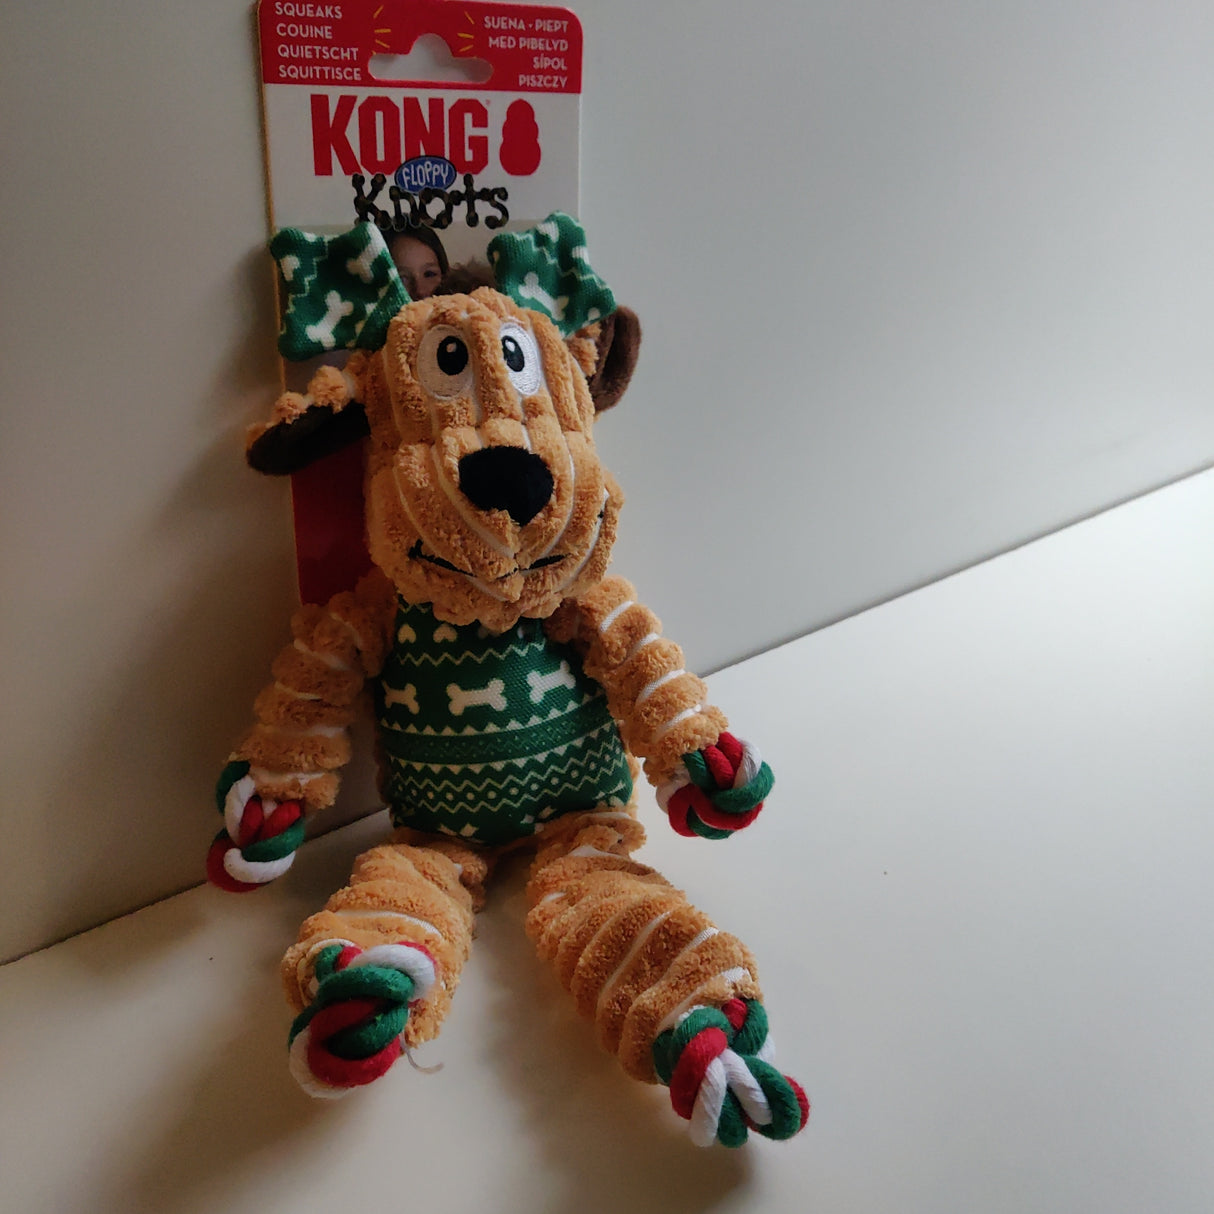 Julebamse fra kong - Holiday Floppy Knots Reindeer